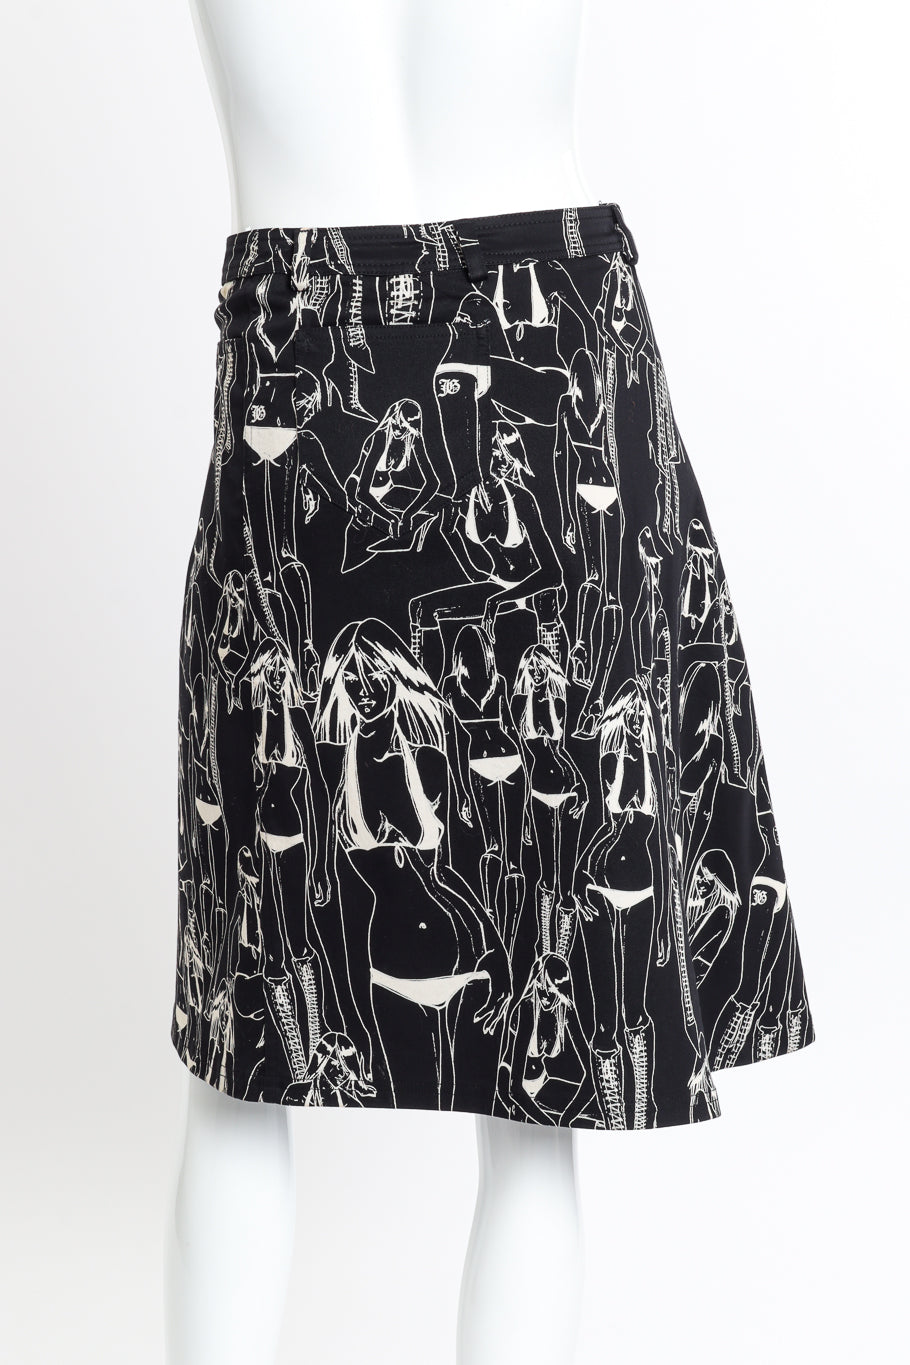 Vintage John Galliano Graphic Tank and Skirt Set skirt back on mannequin closeup @recess la